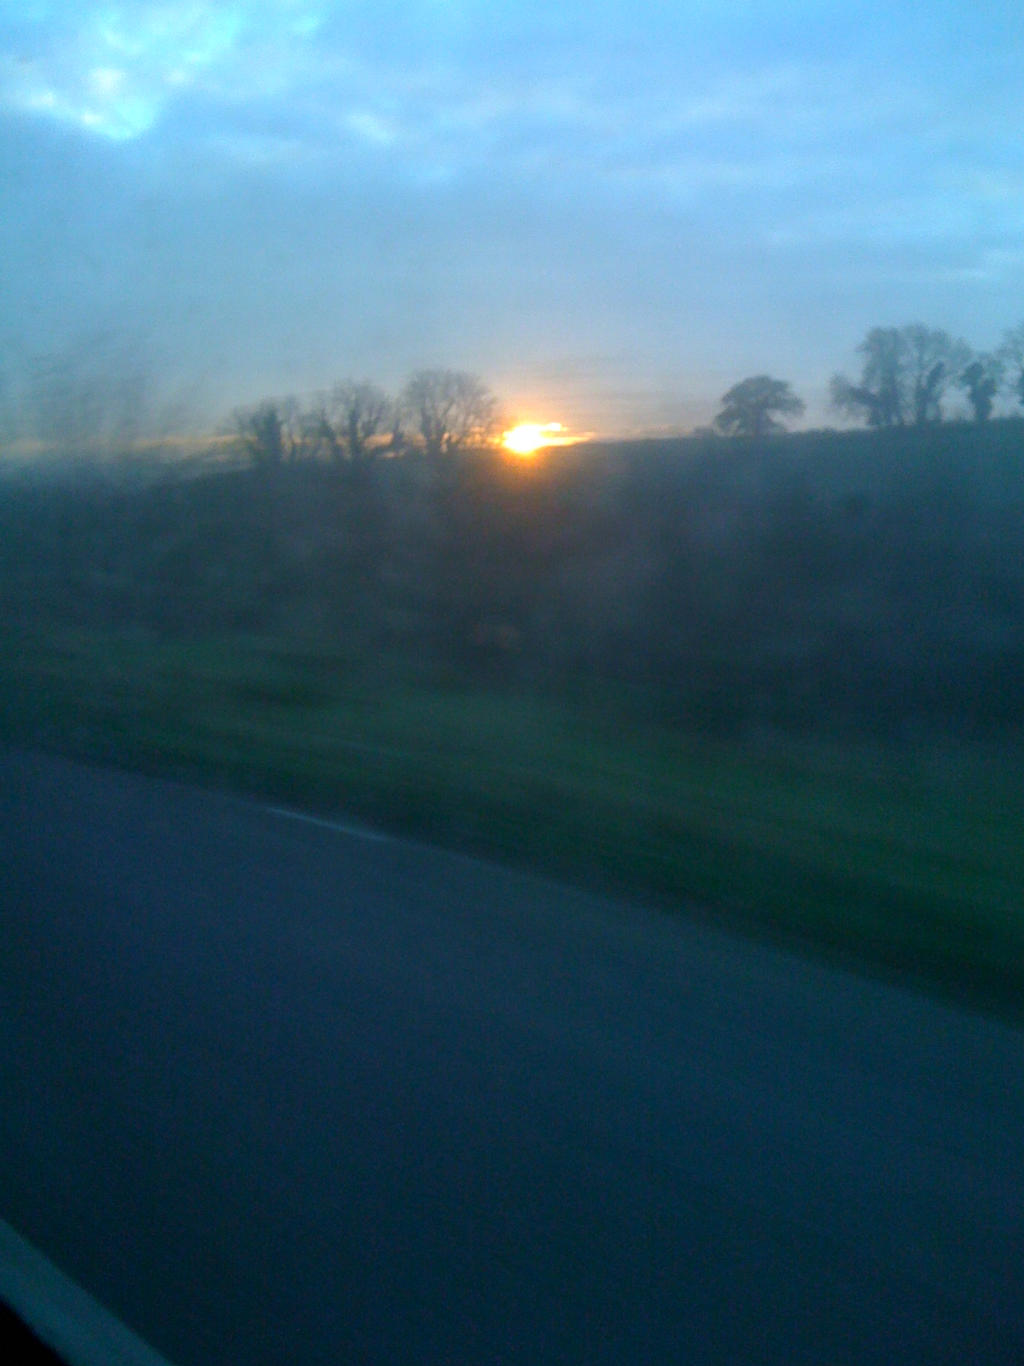 Sunrise on way to college 2